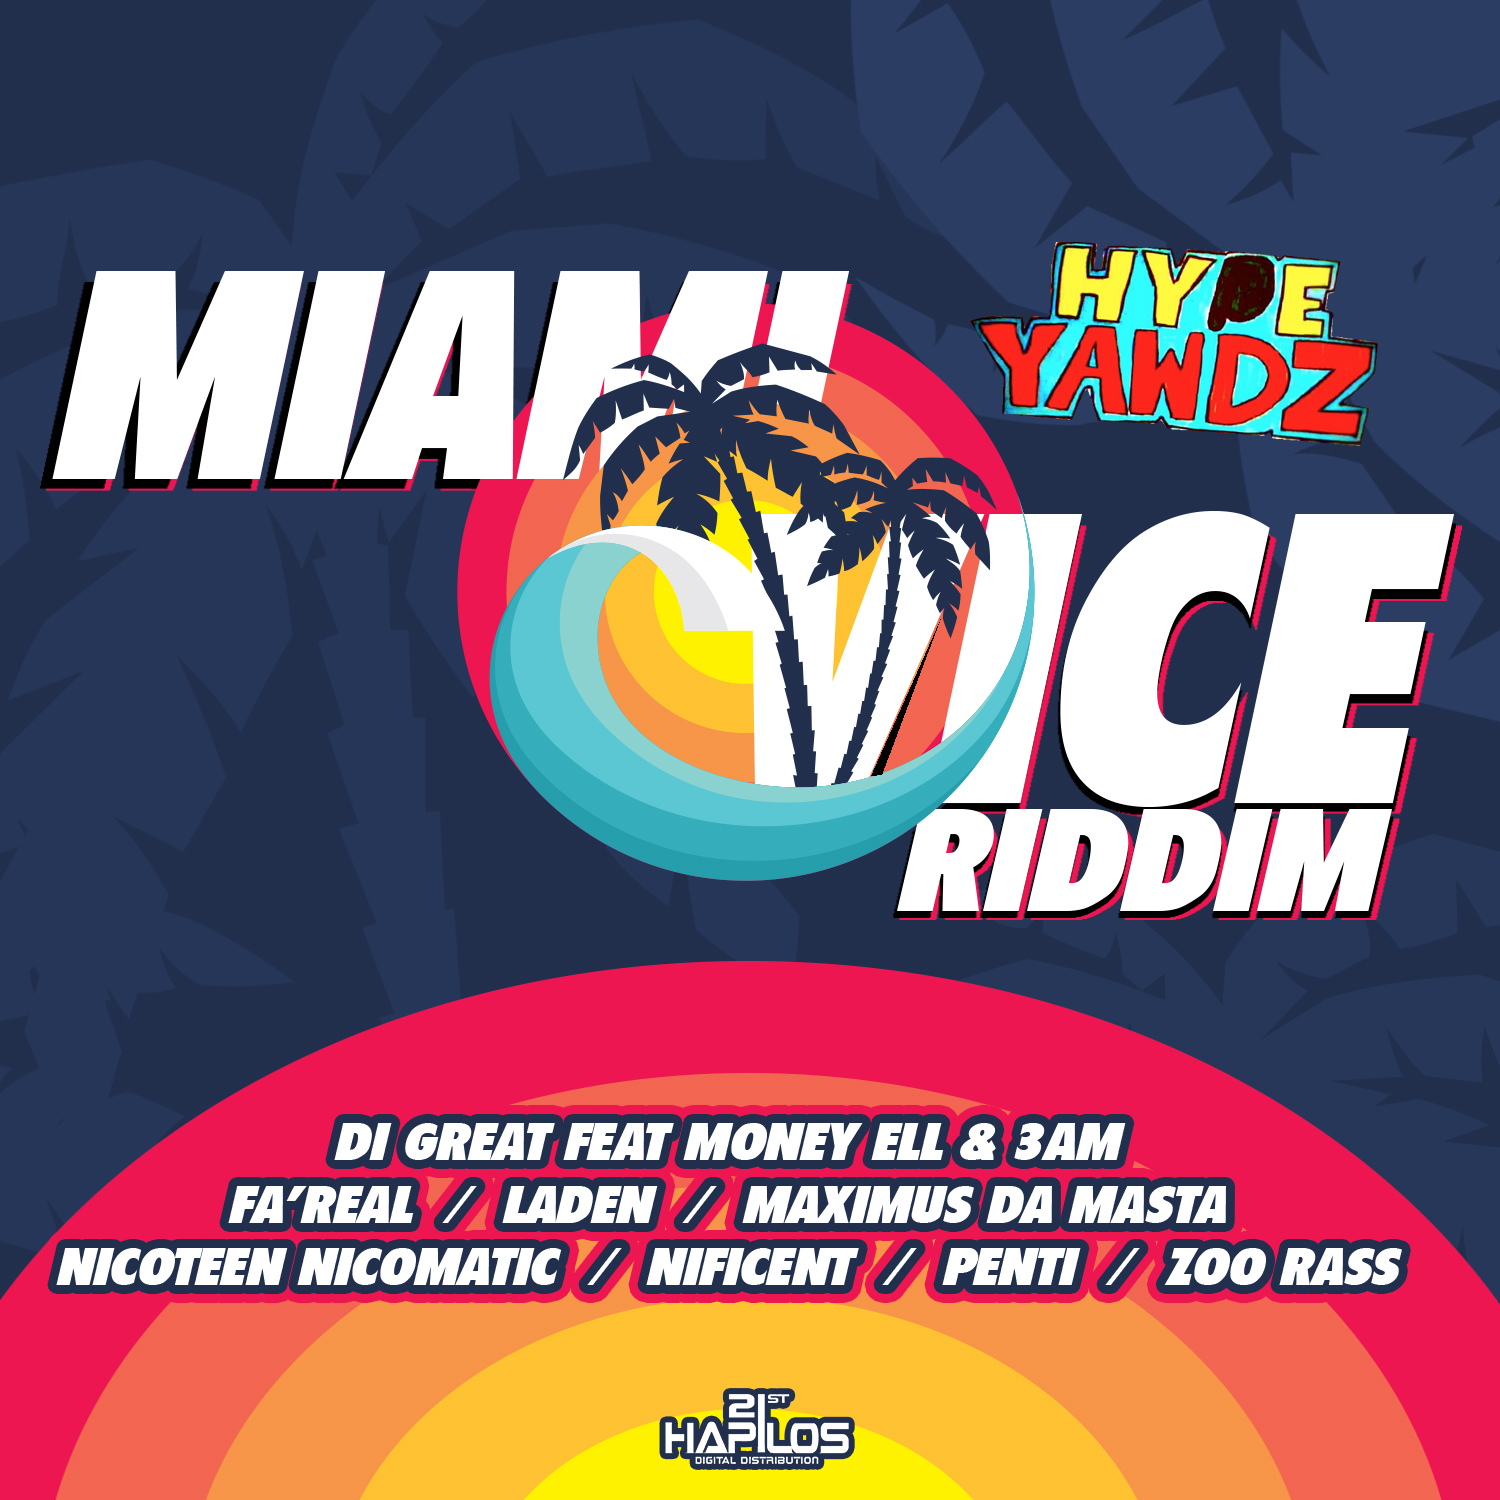 00 - MIAMI VICE RIDDIM HYPEYAWDZ RECORDS.jpg